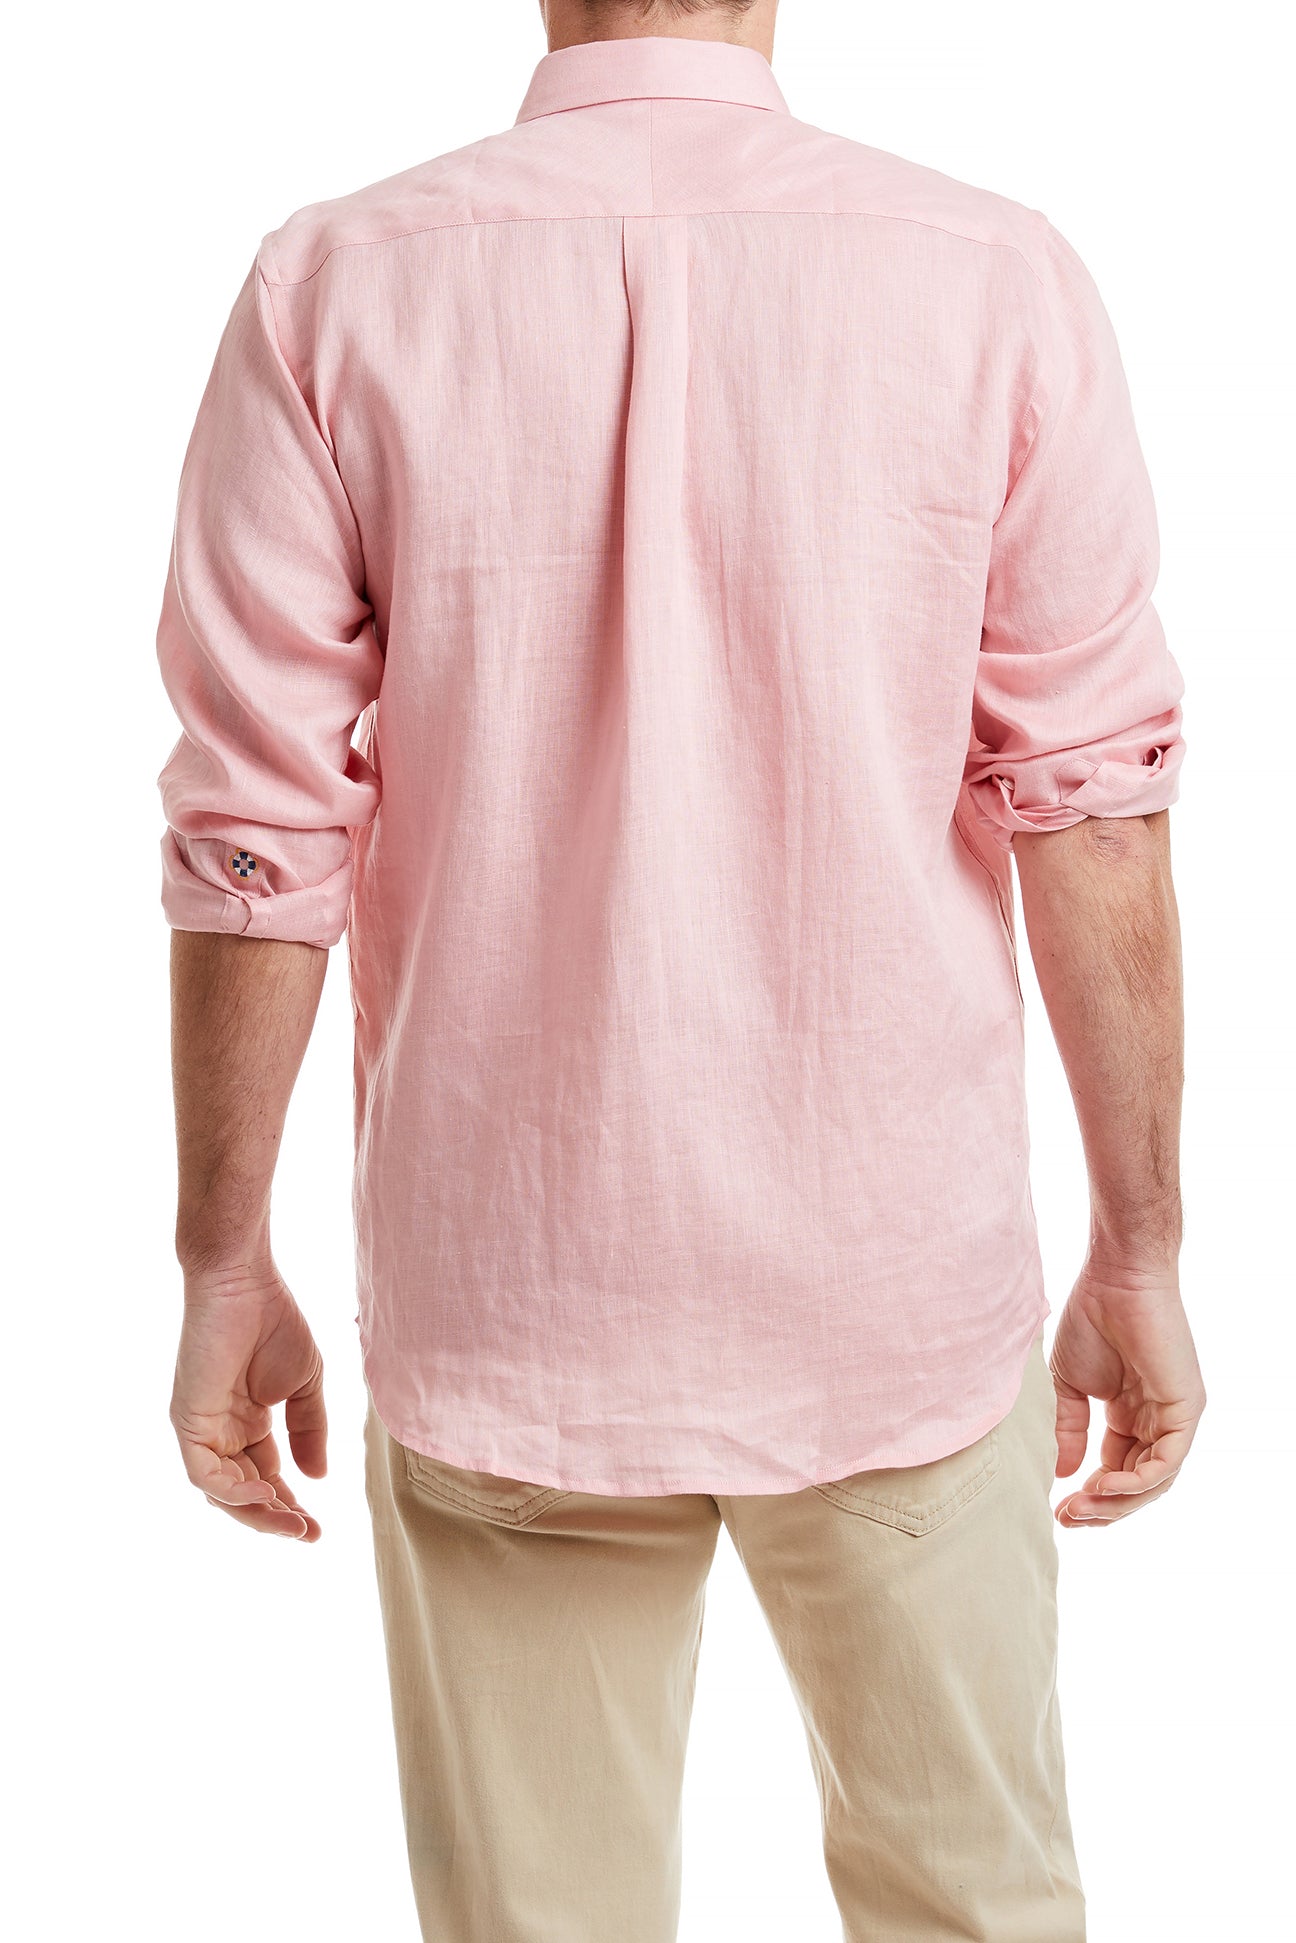 Chase Shirt Linen Pink MENS SPORT SHIRTS Castaway Clothing